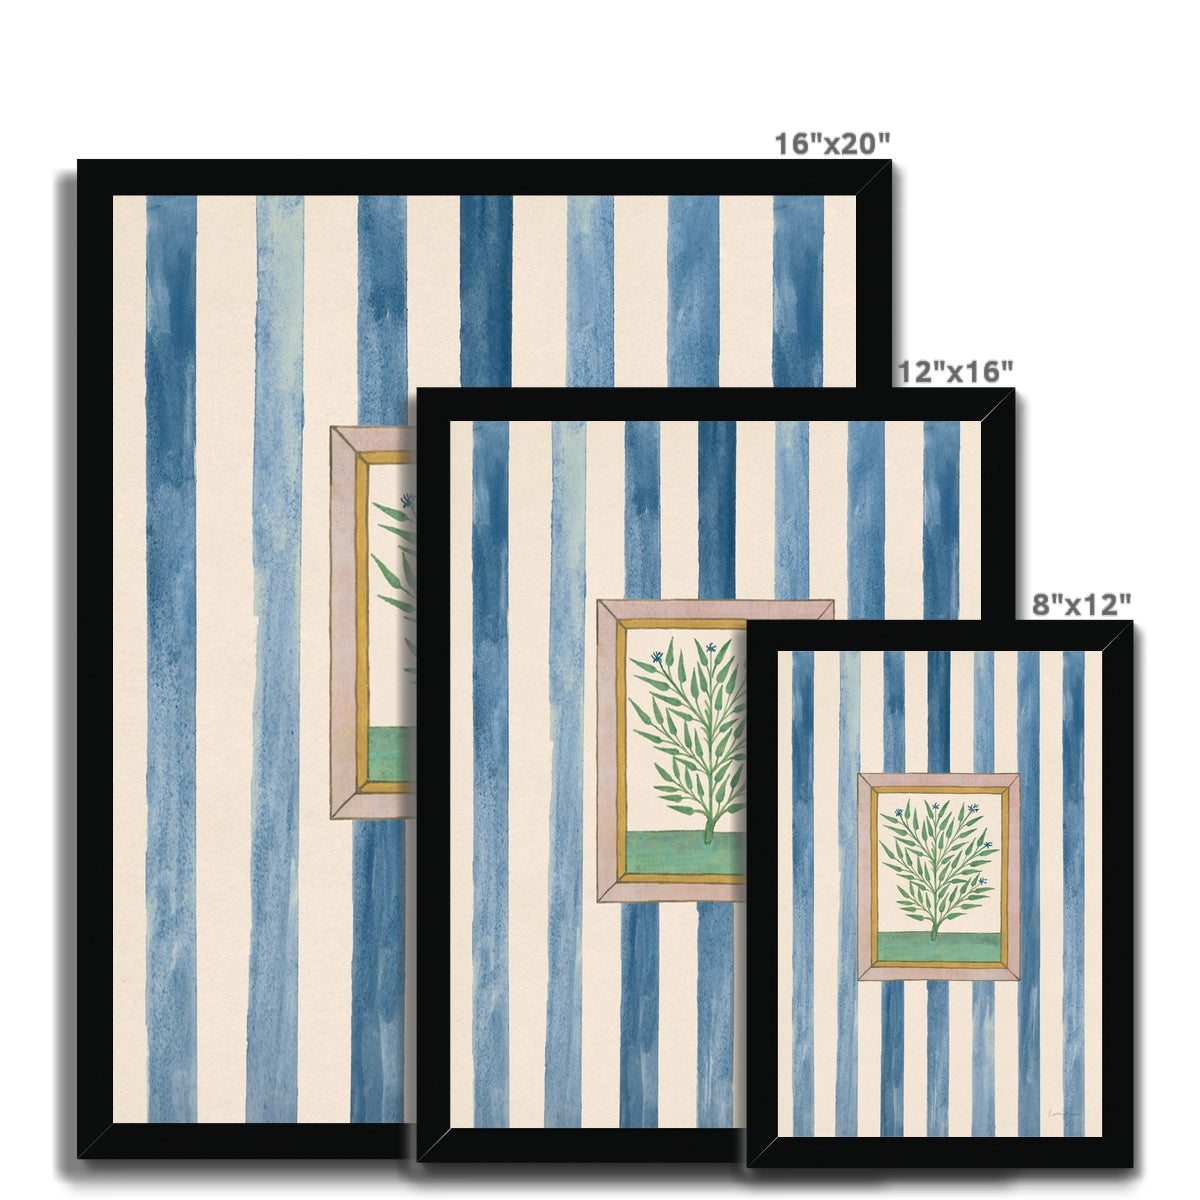 Book of Herbs Blue Stripe Framed Fine Art Print